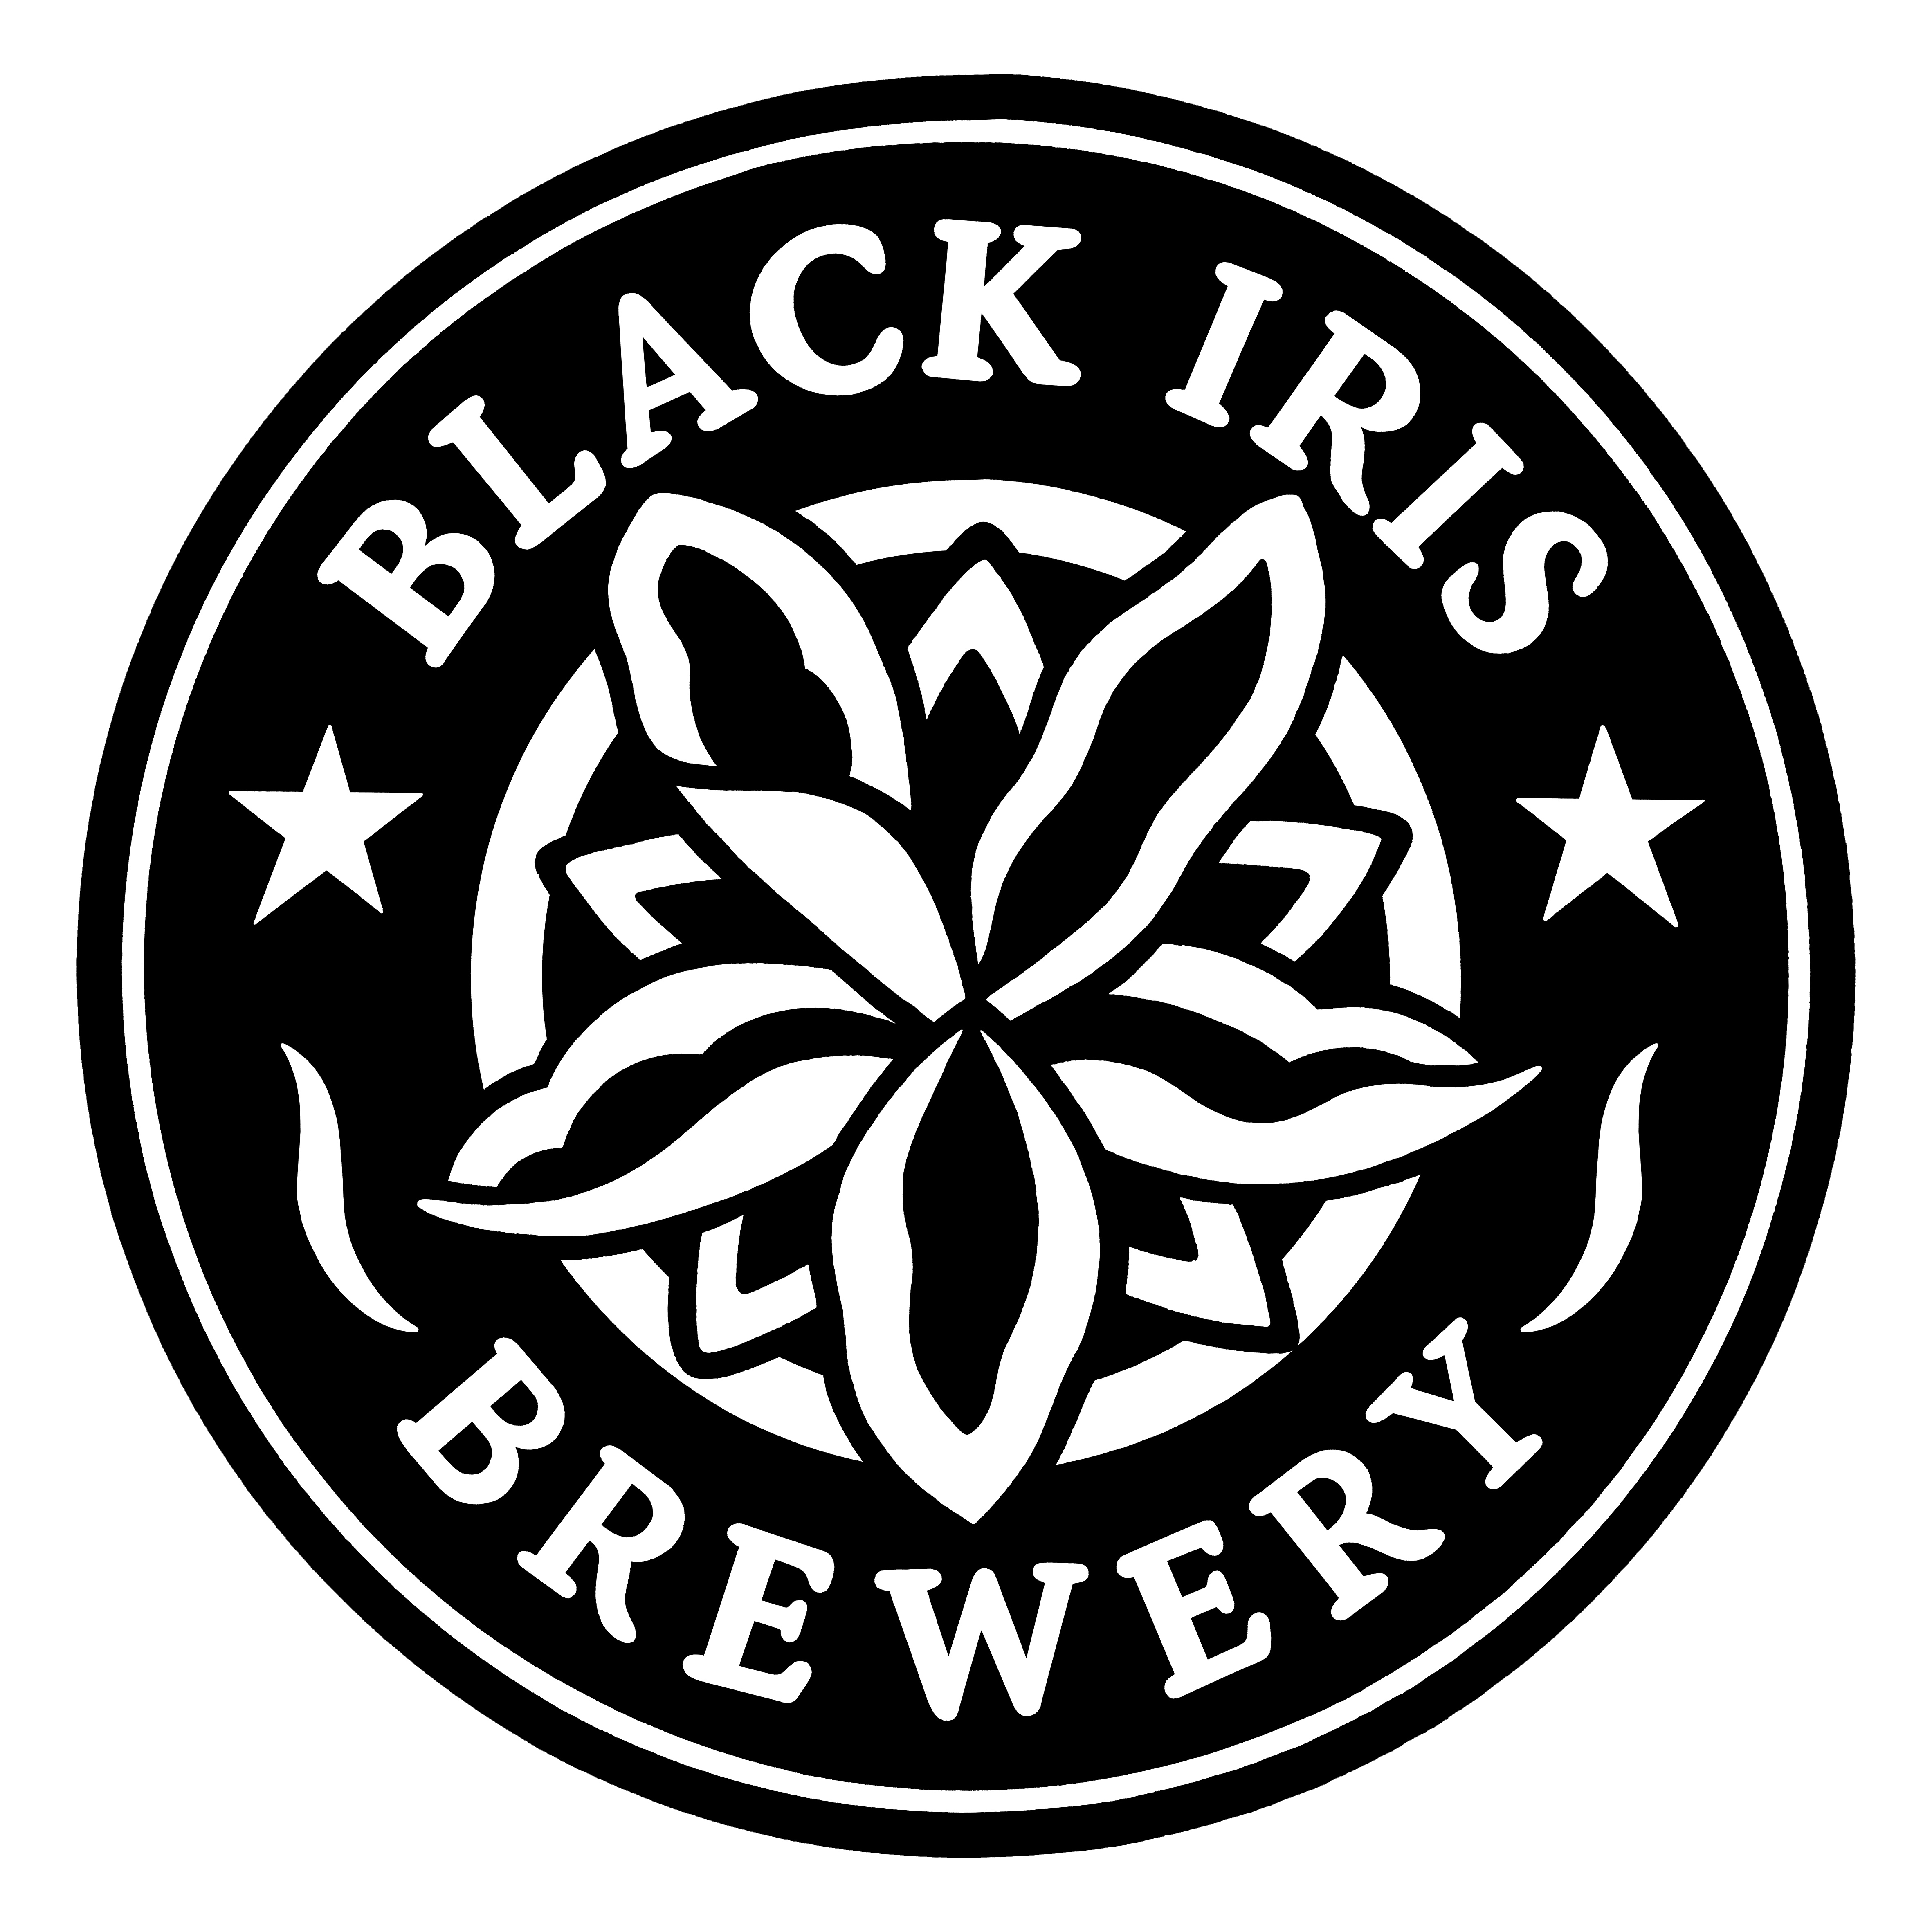 black iris brewery t shirt